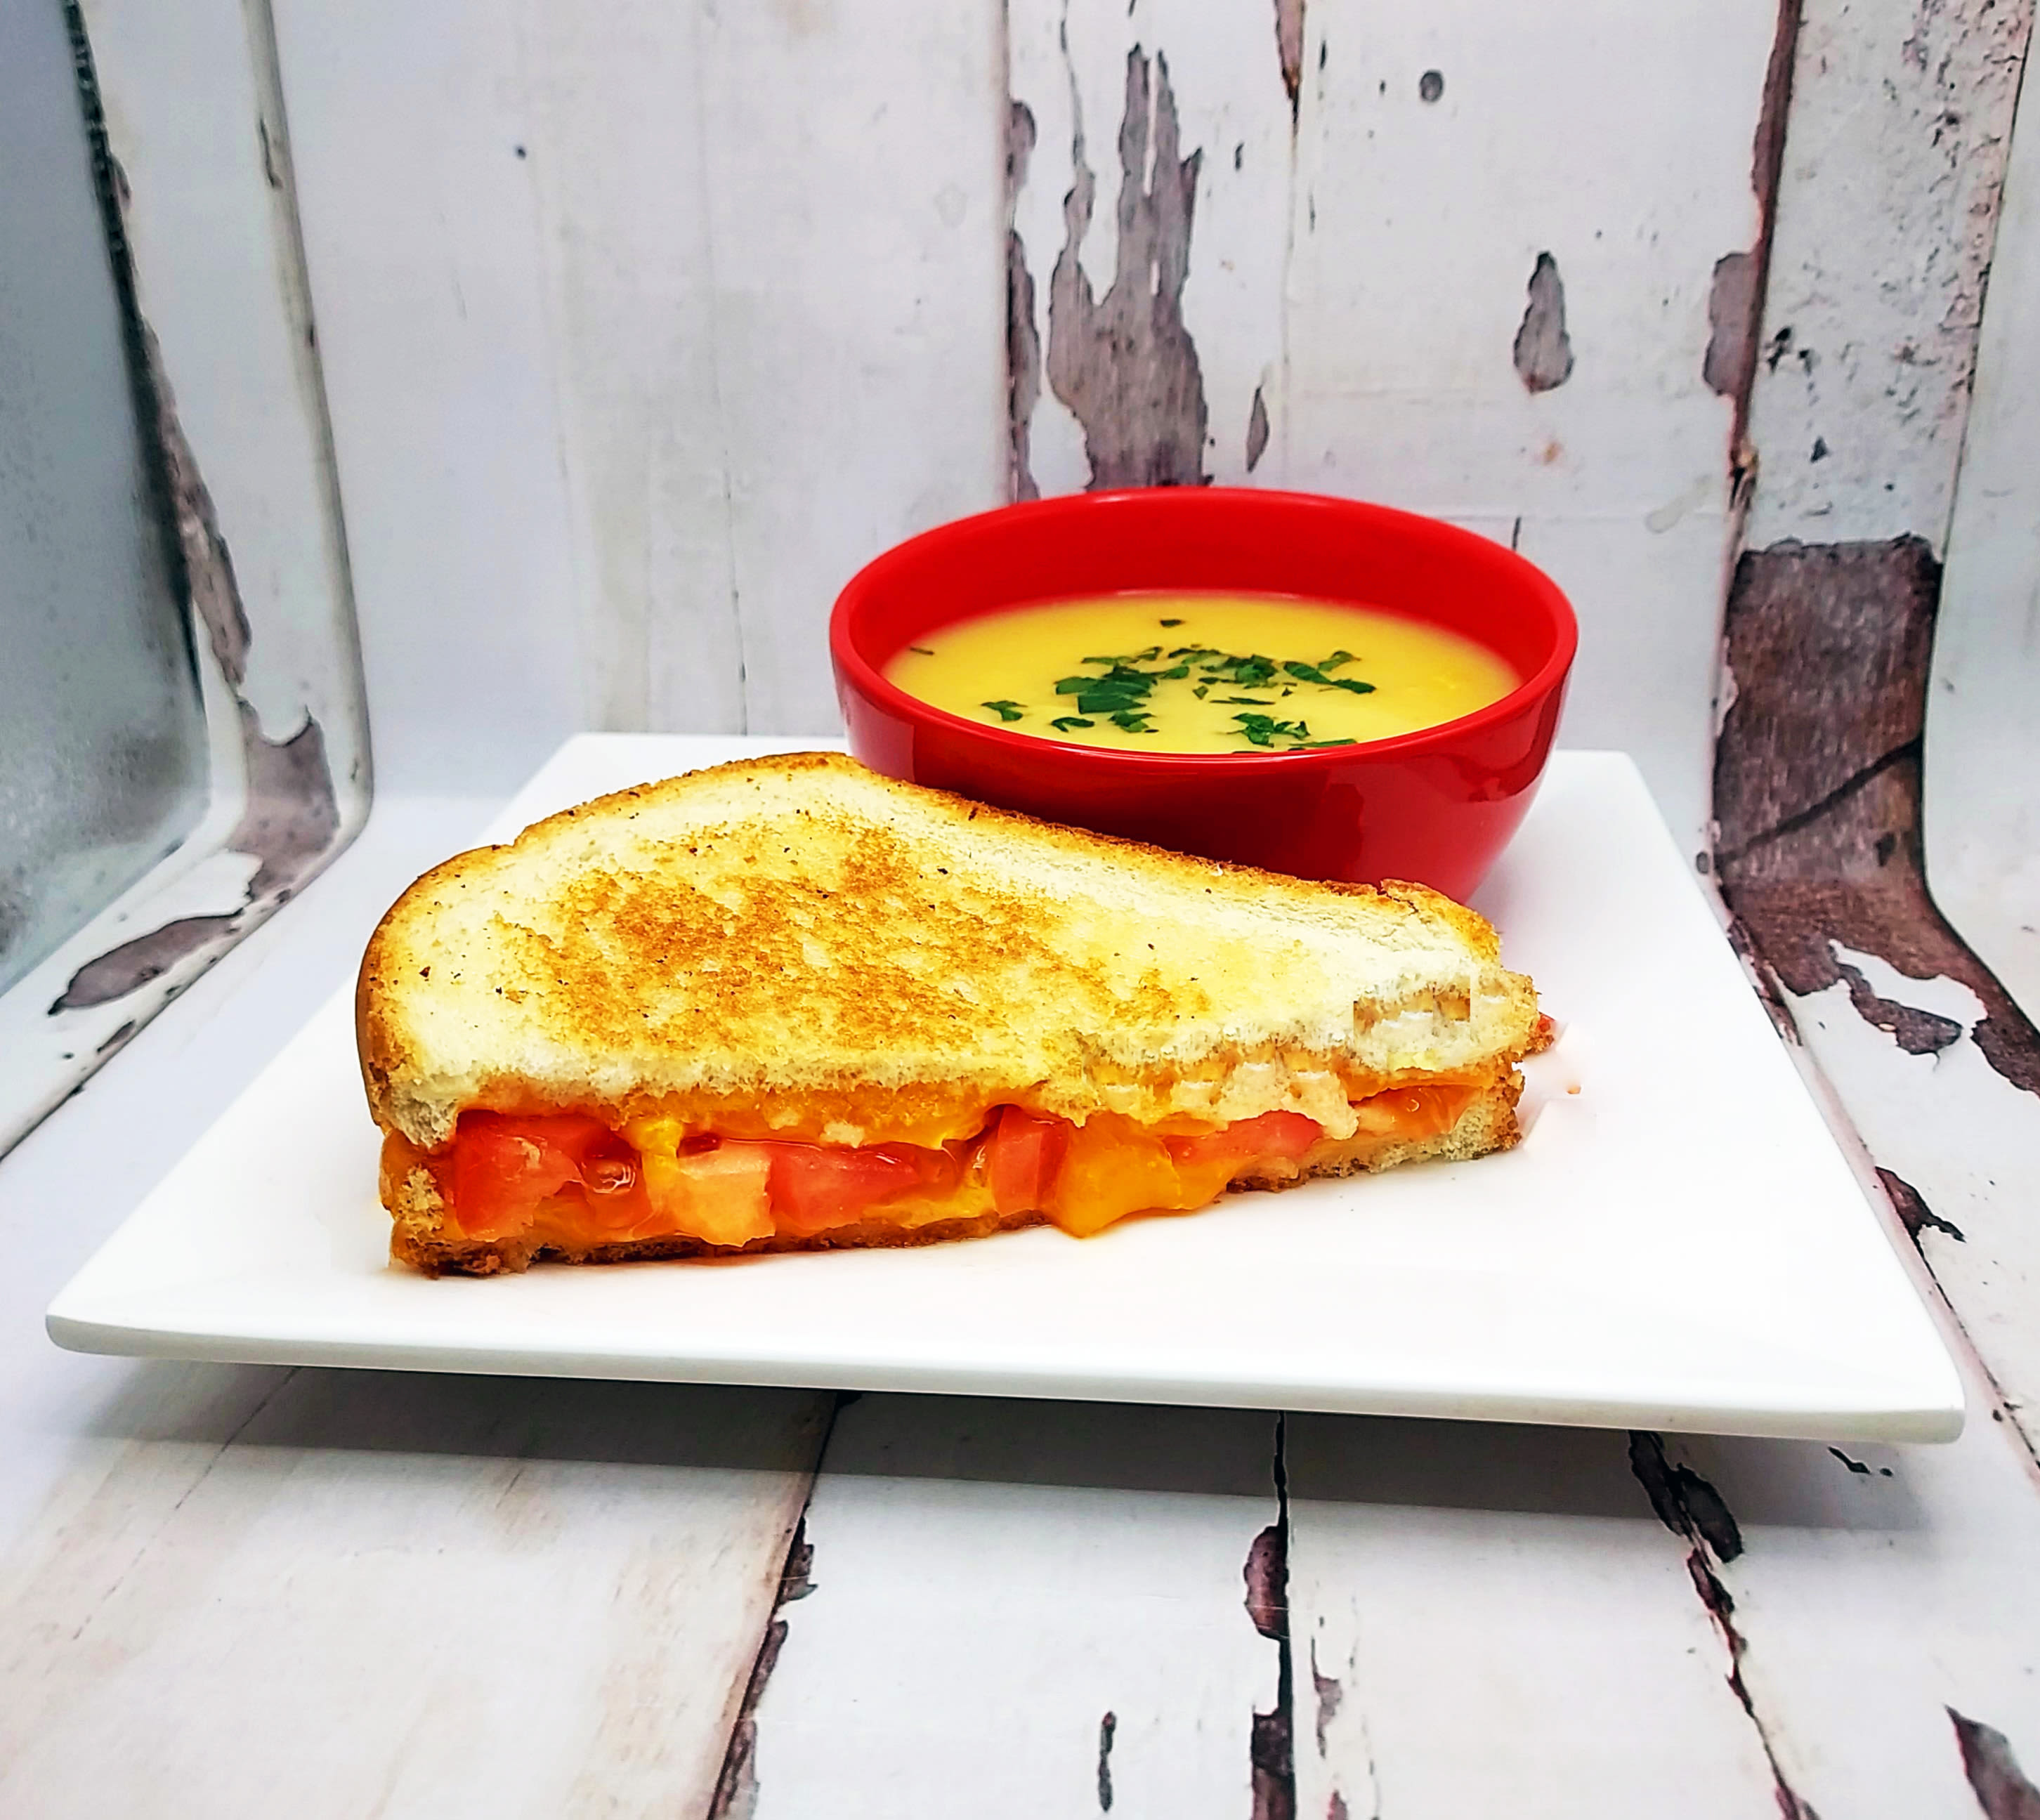  Soup Sandwich Enhanced at Woodside Senior Living in Springfield, Oregon